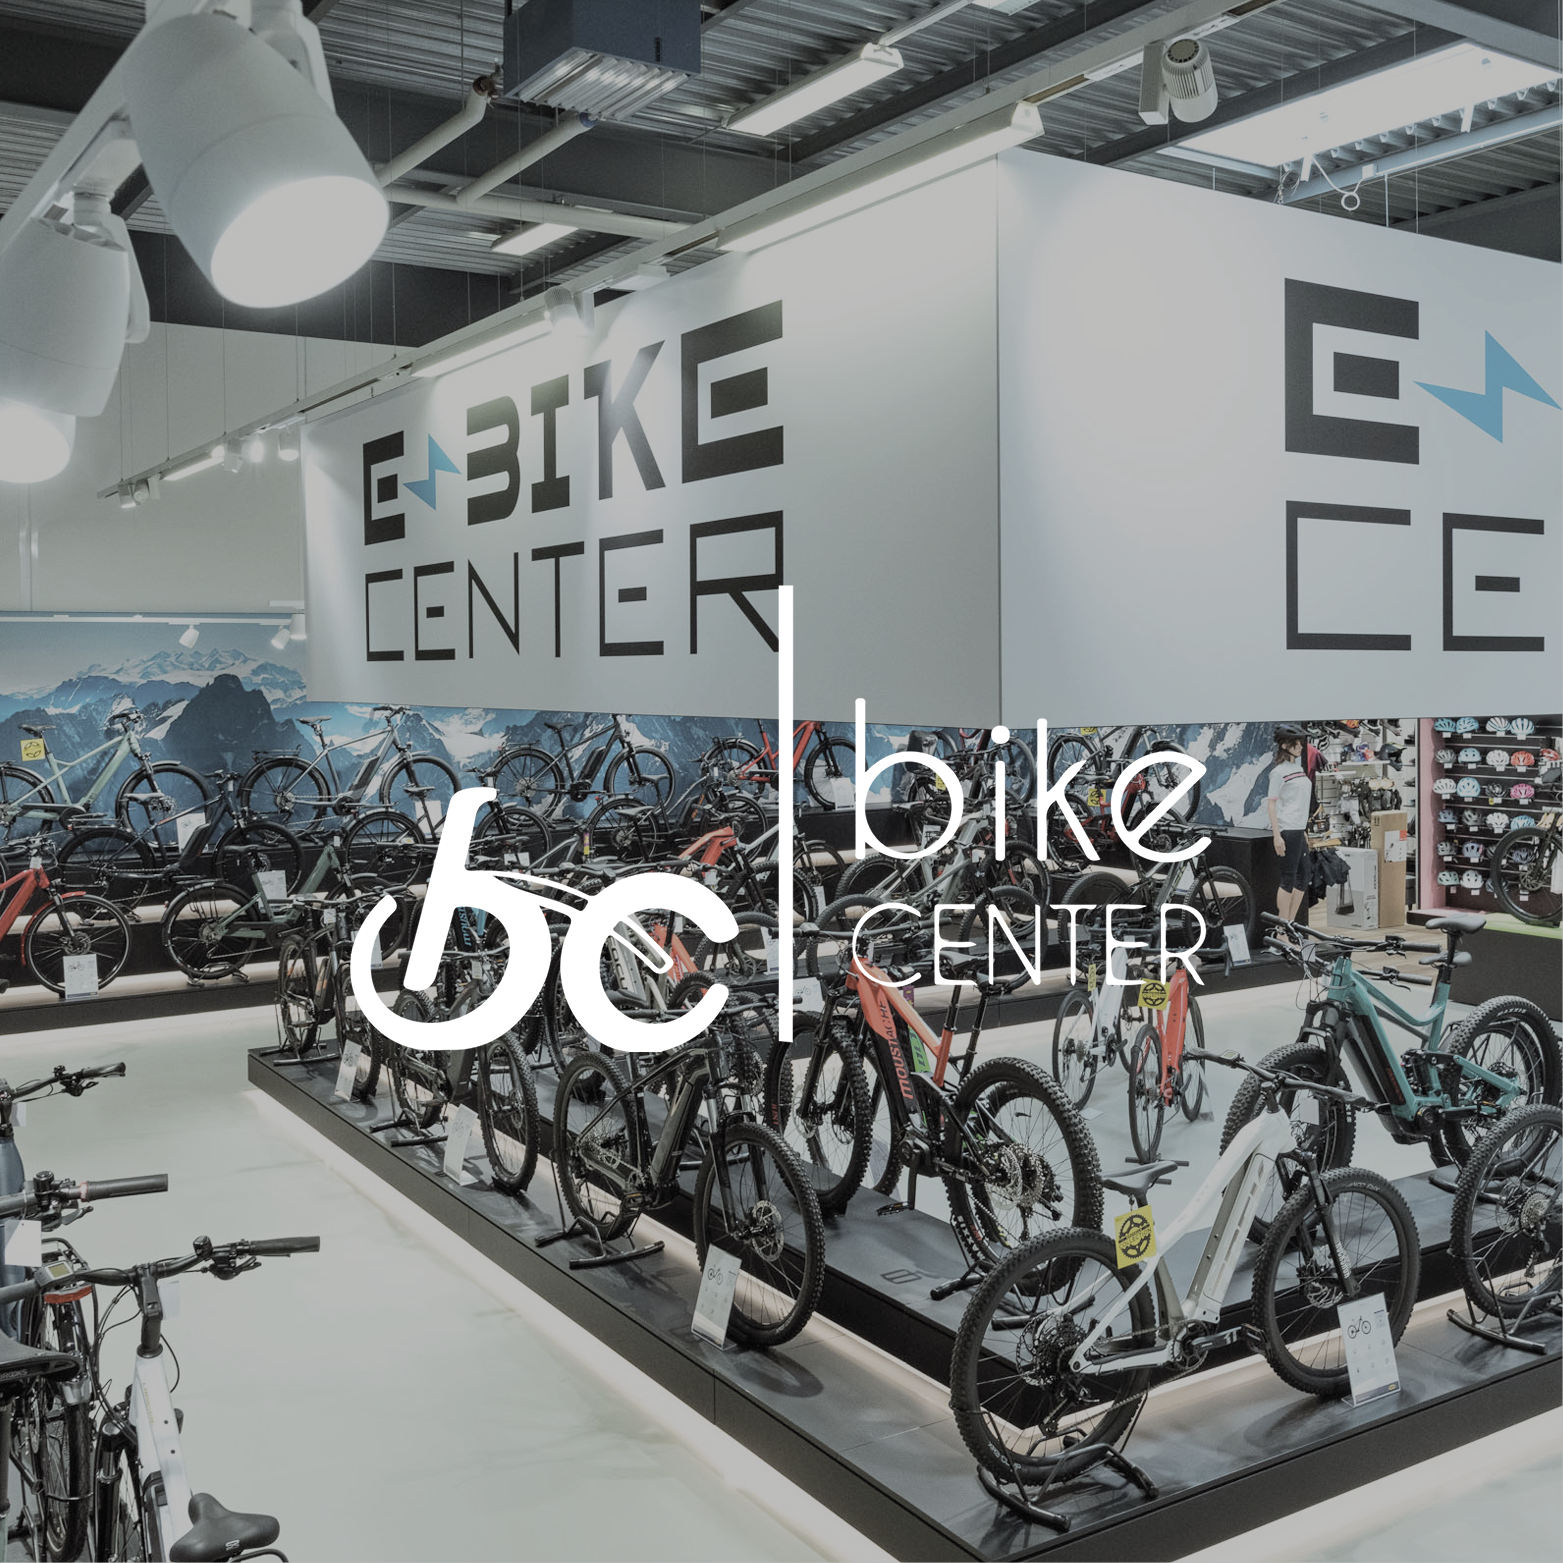 Bikes Center